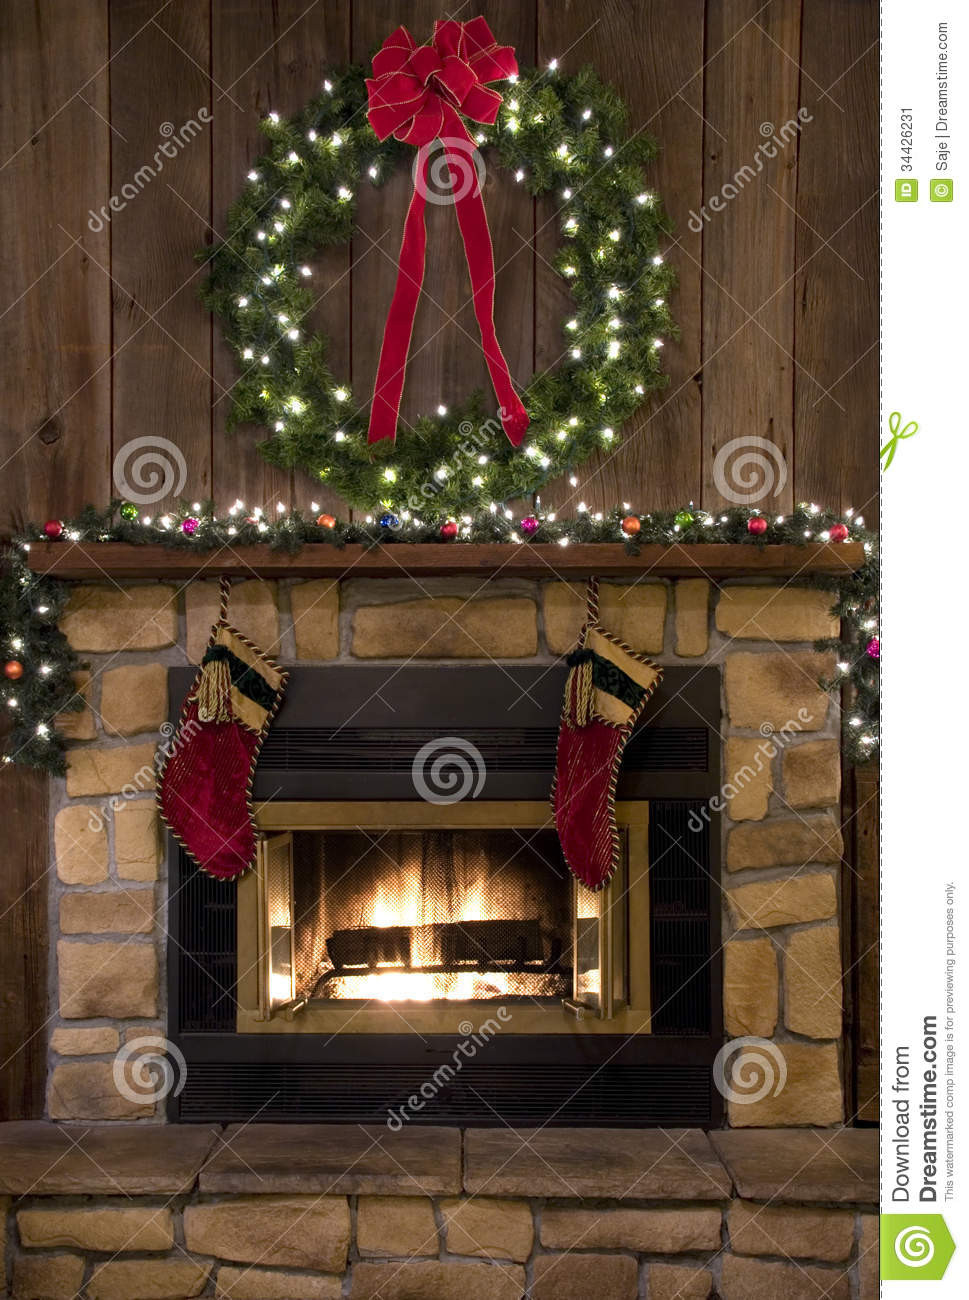 Christmas Stockings Hanging Over Fireplace
 Christmas Fireplace Hearth With Wreath And Stockings Stock